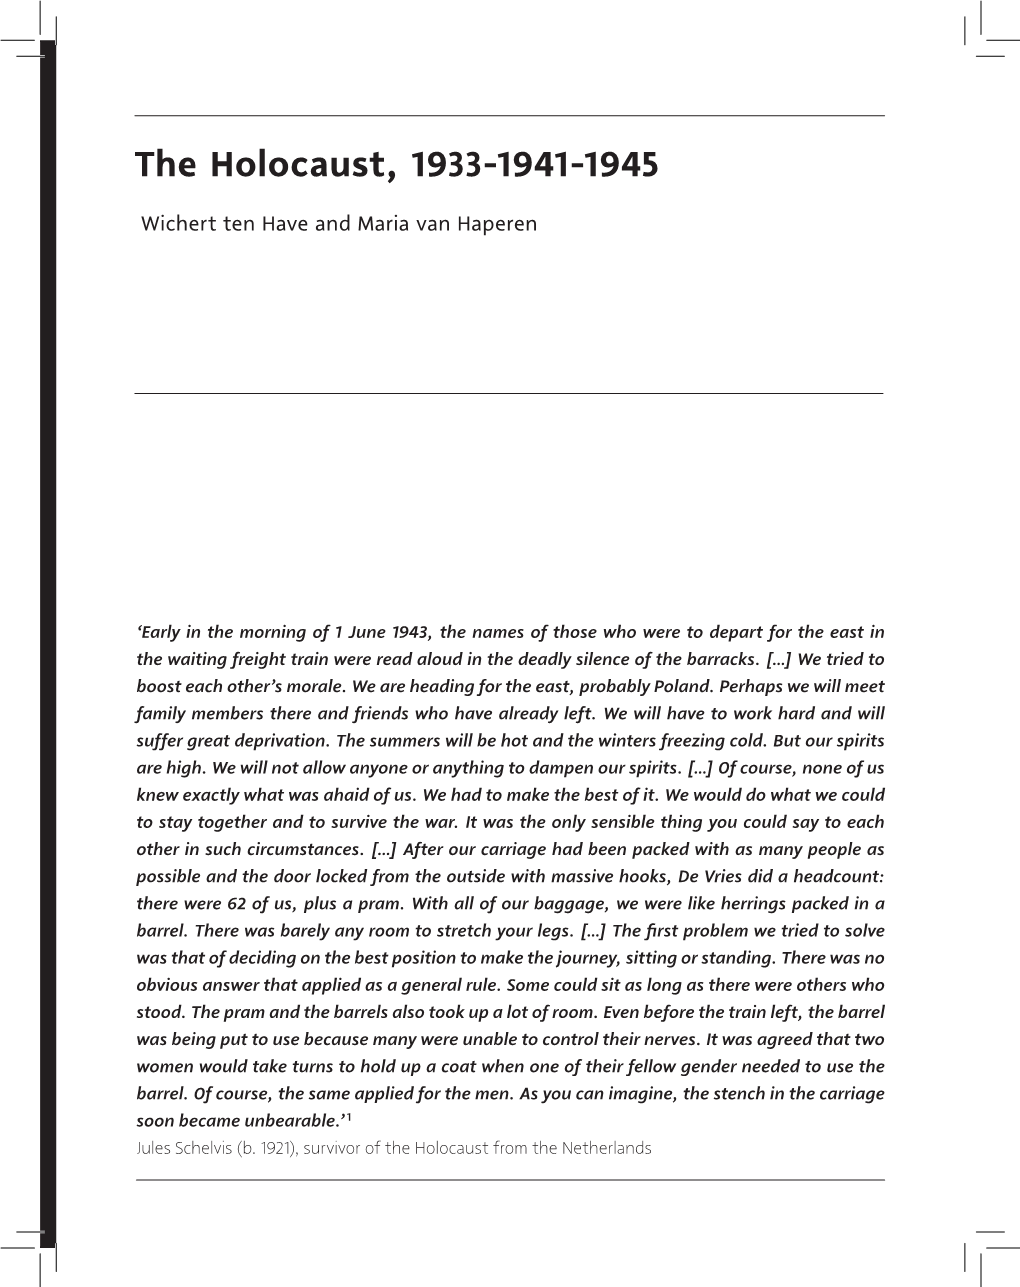 The Holocaust, 1933-1941-1945